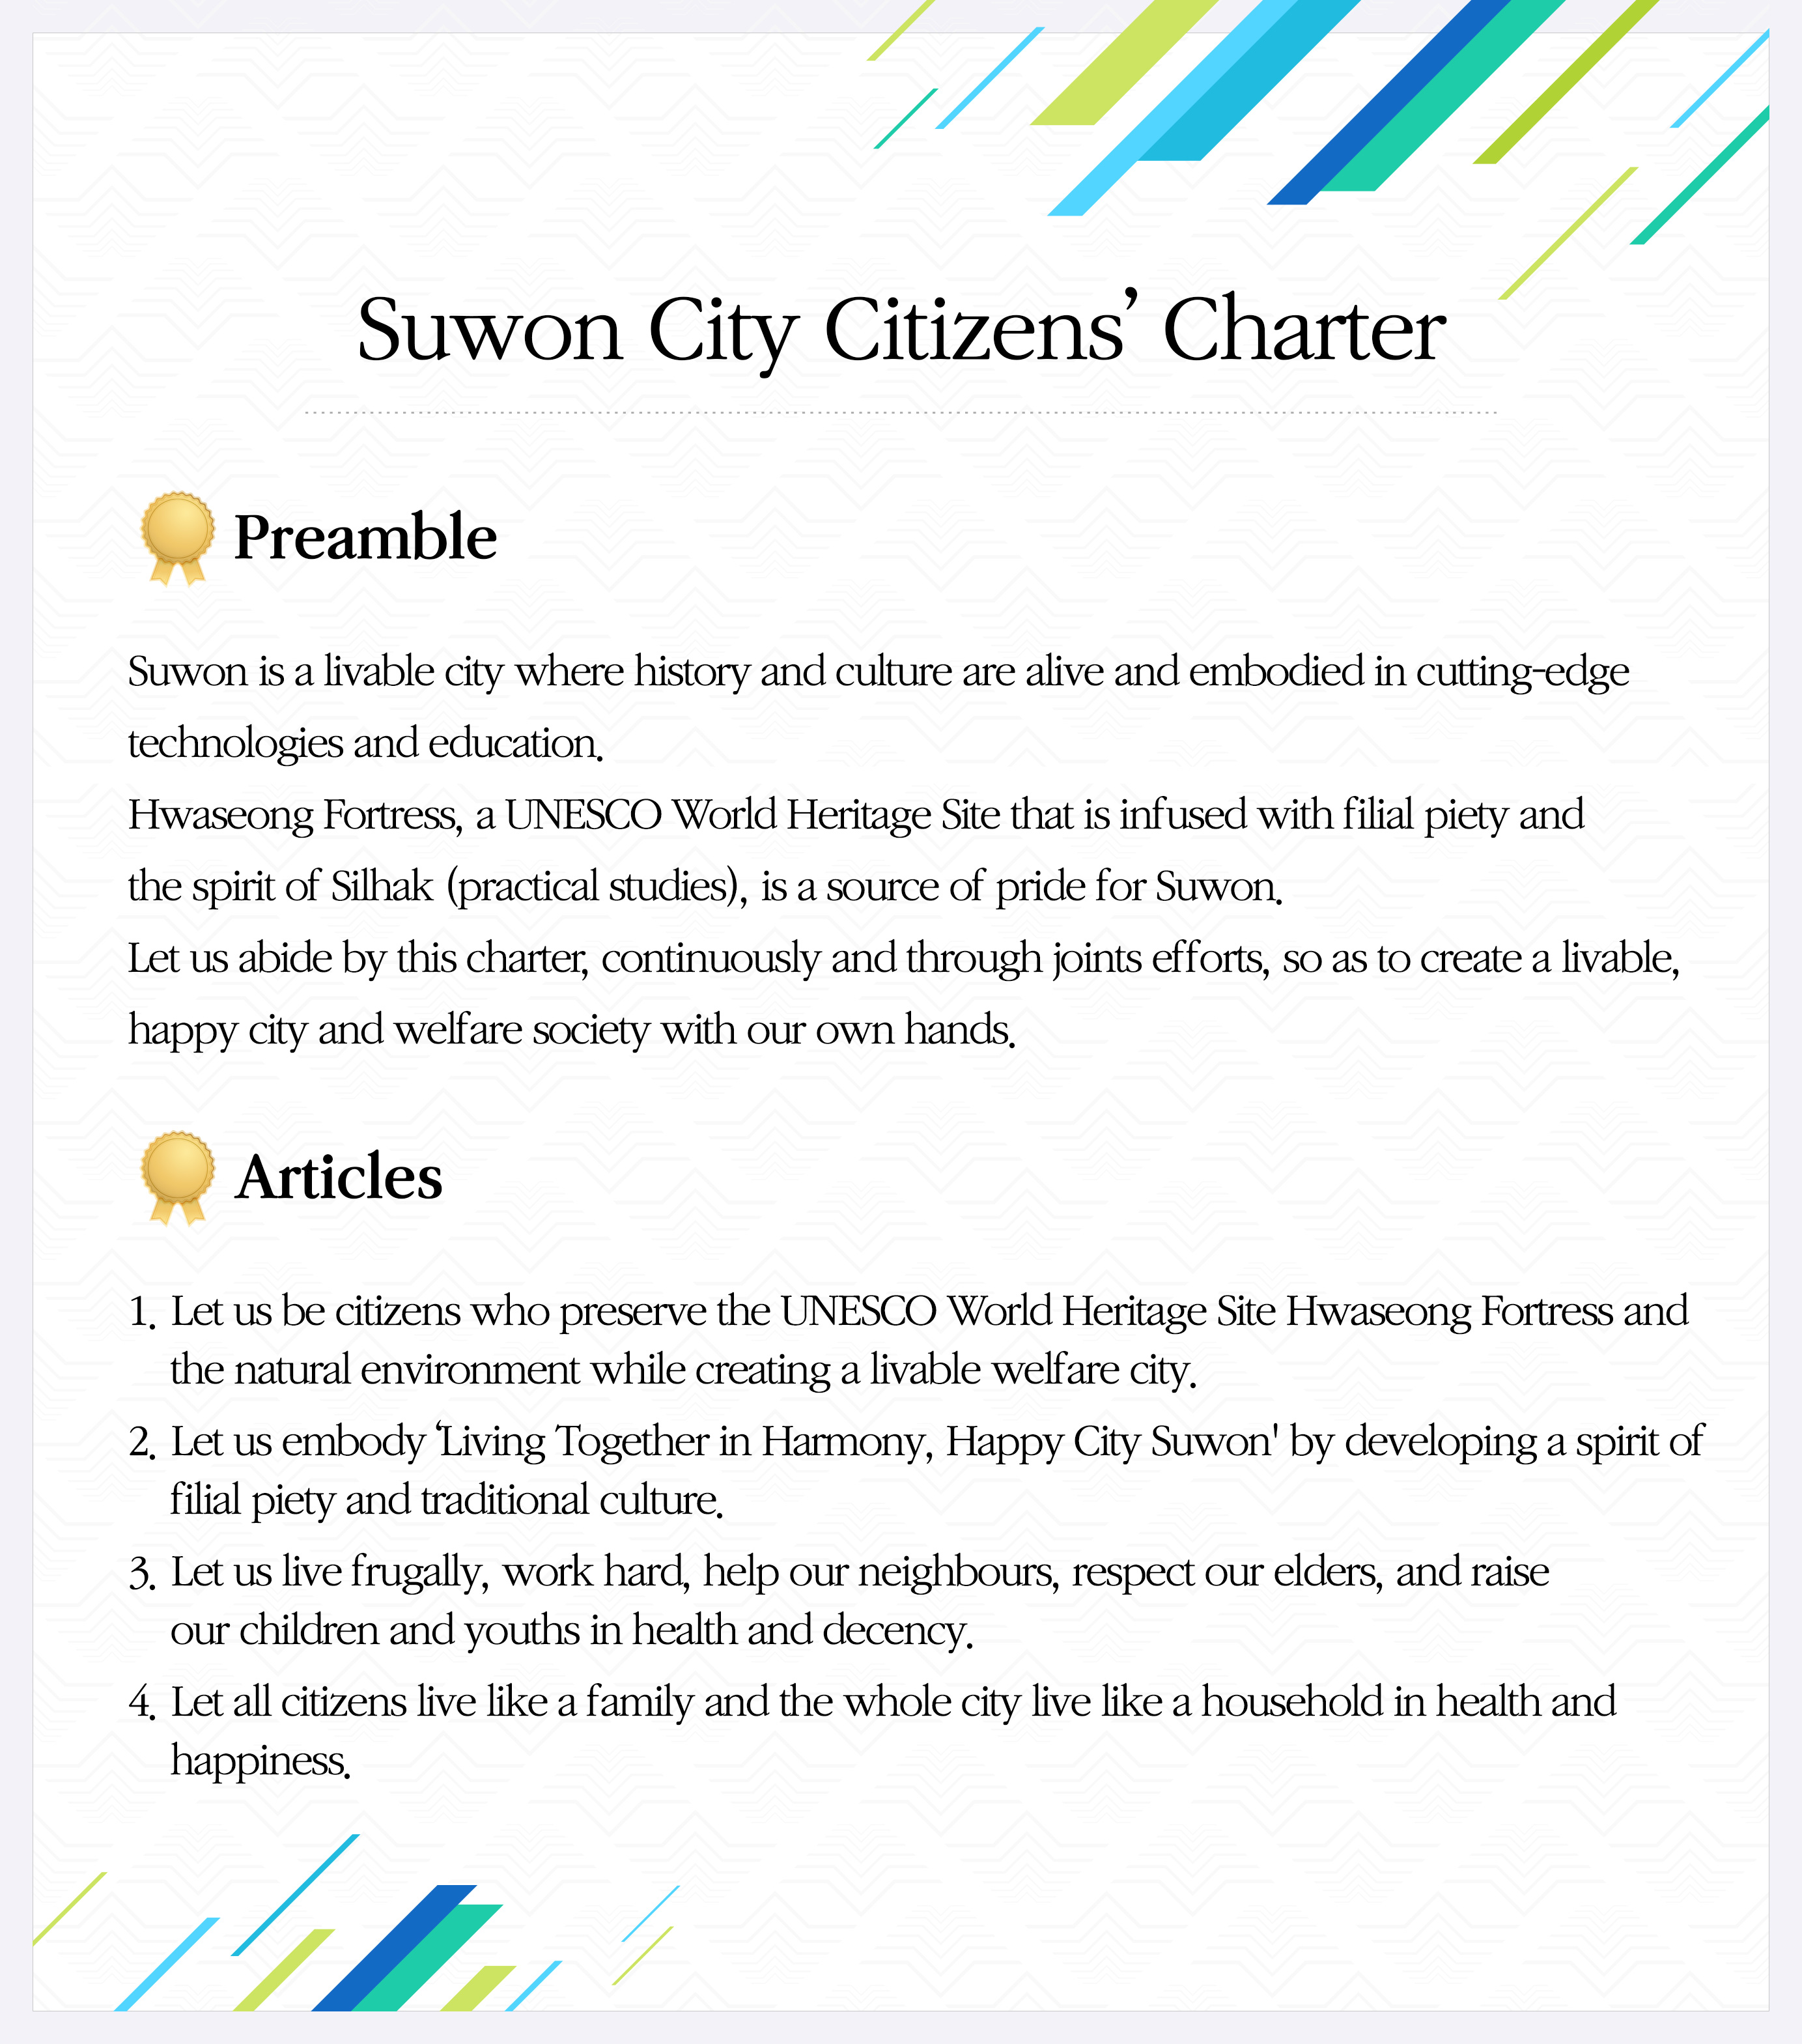 Suwon City Citizens Charter Read More Body Note